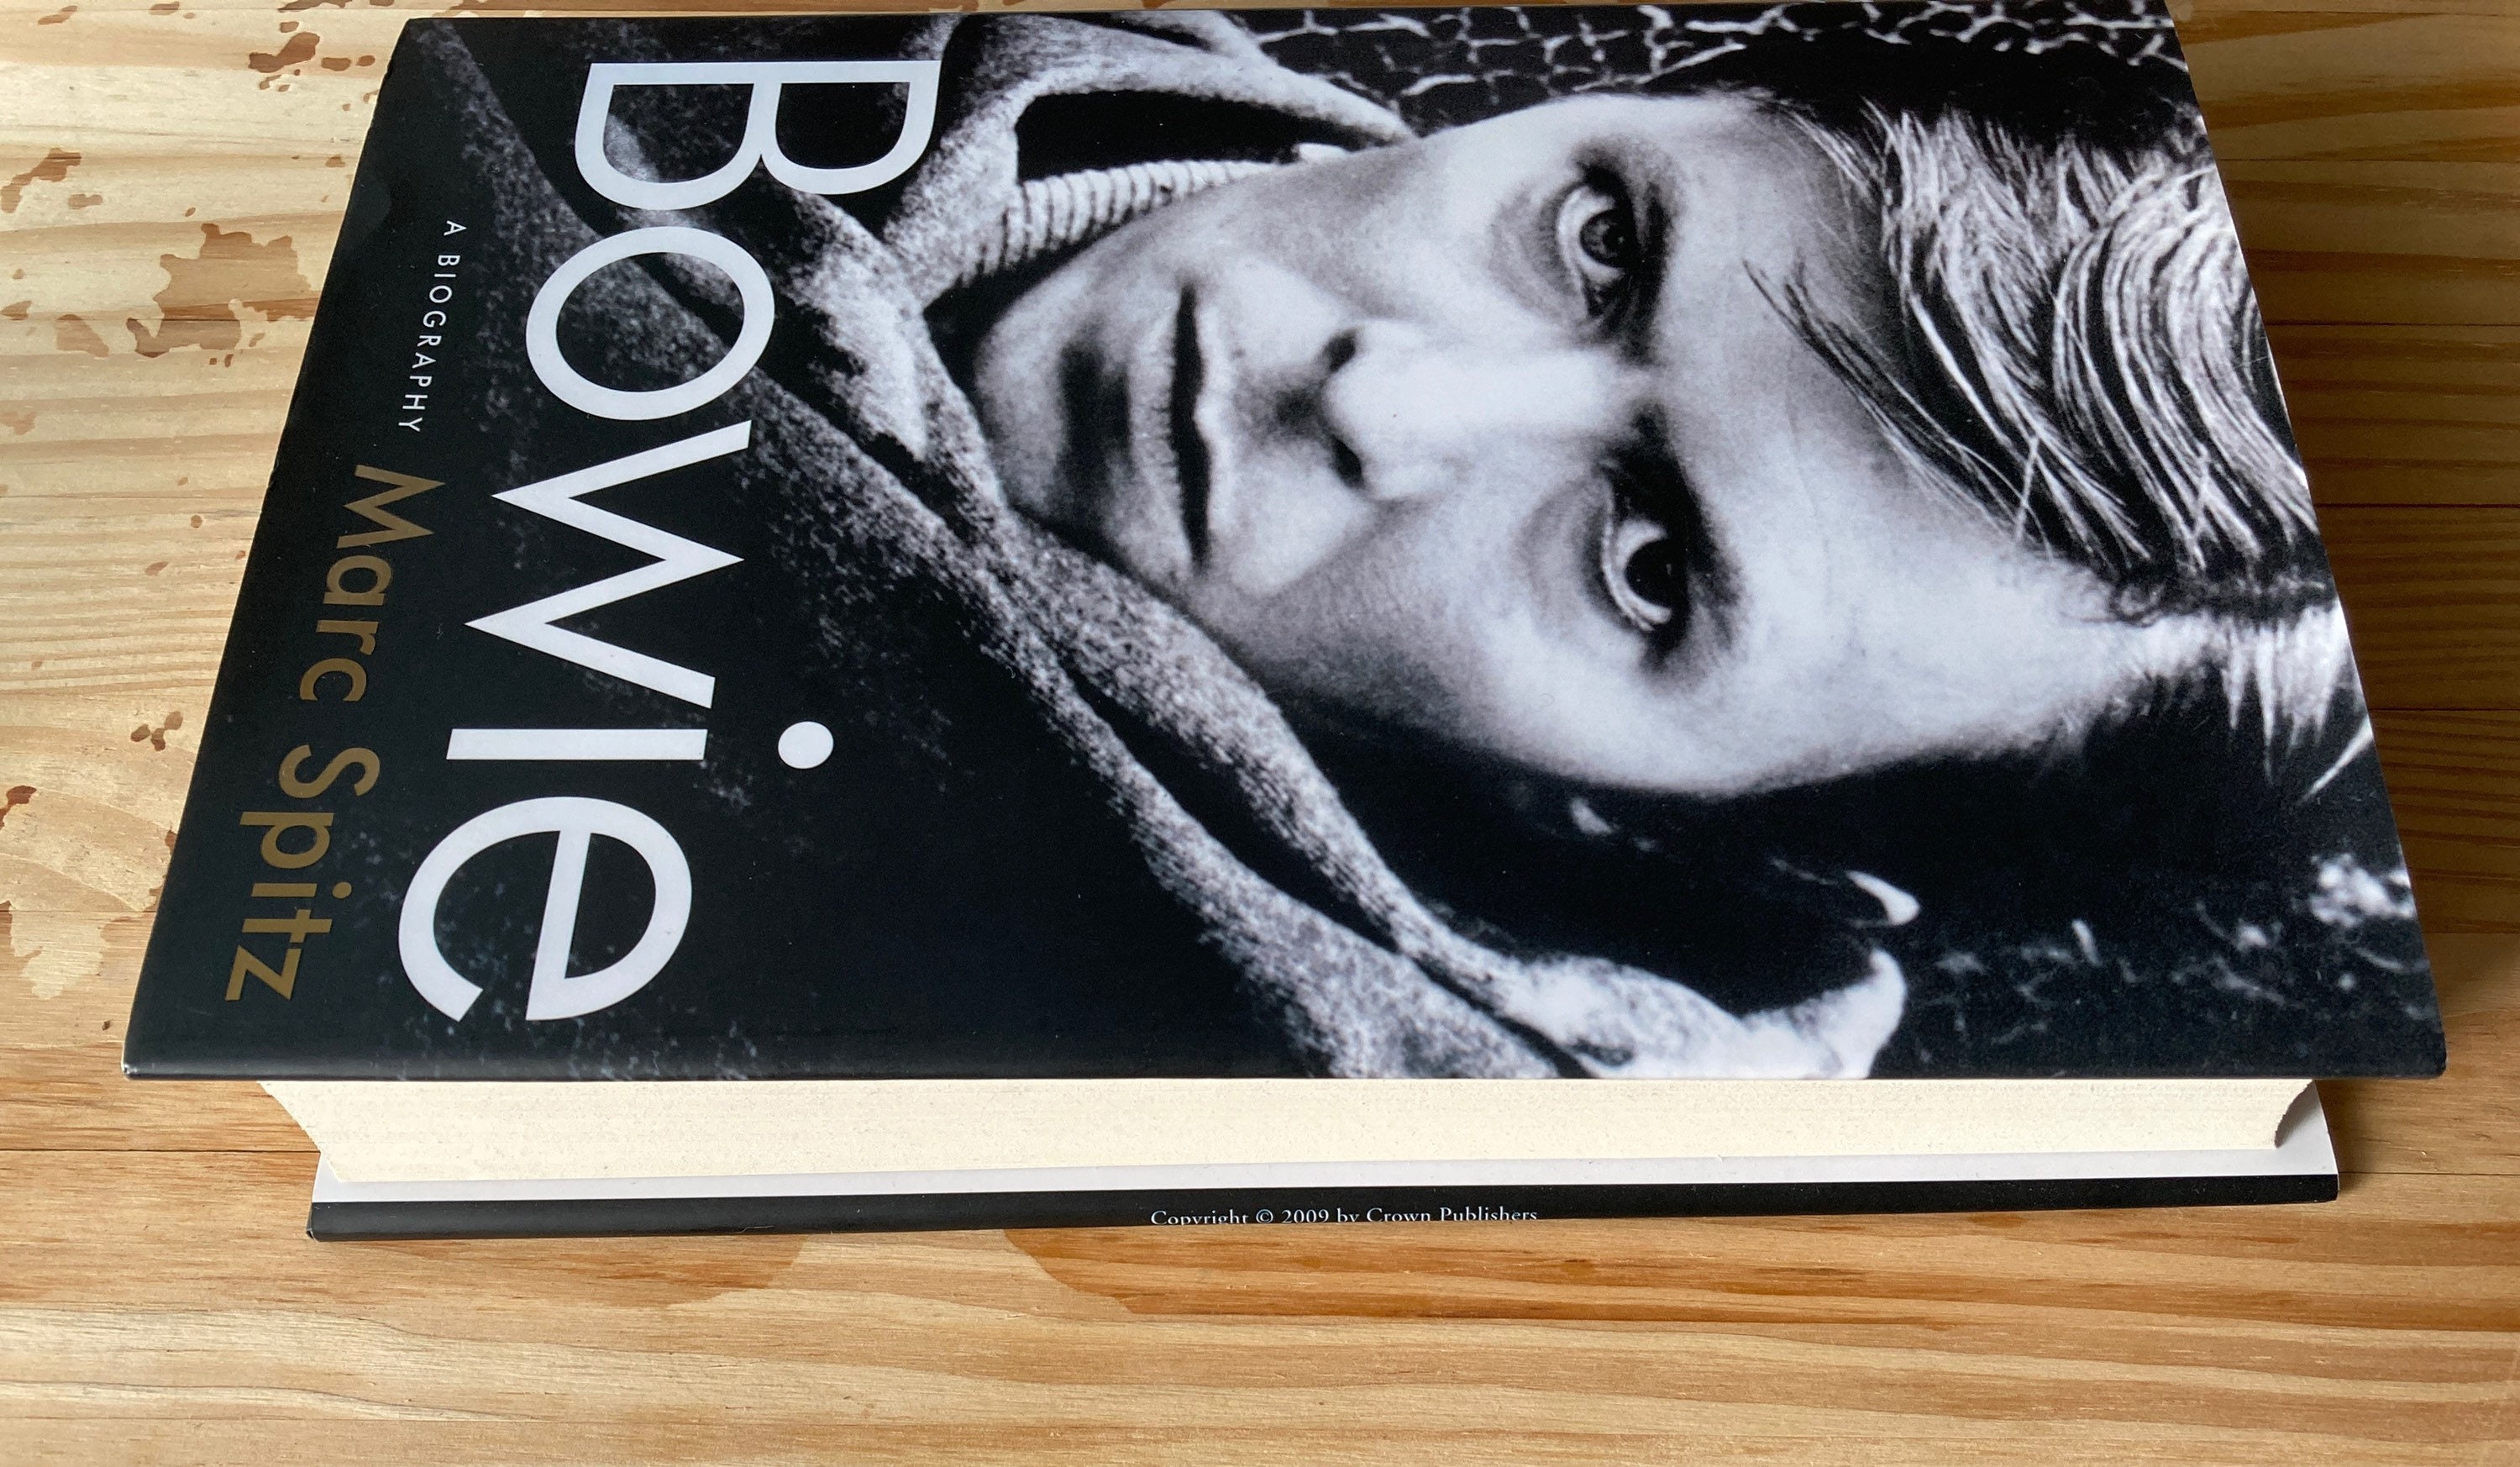 david bowie biography books